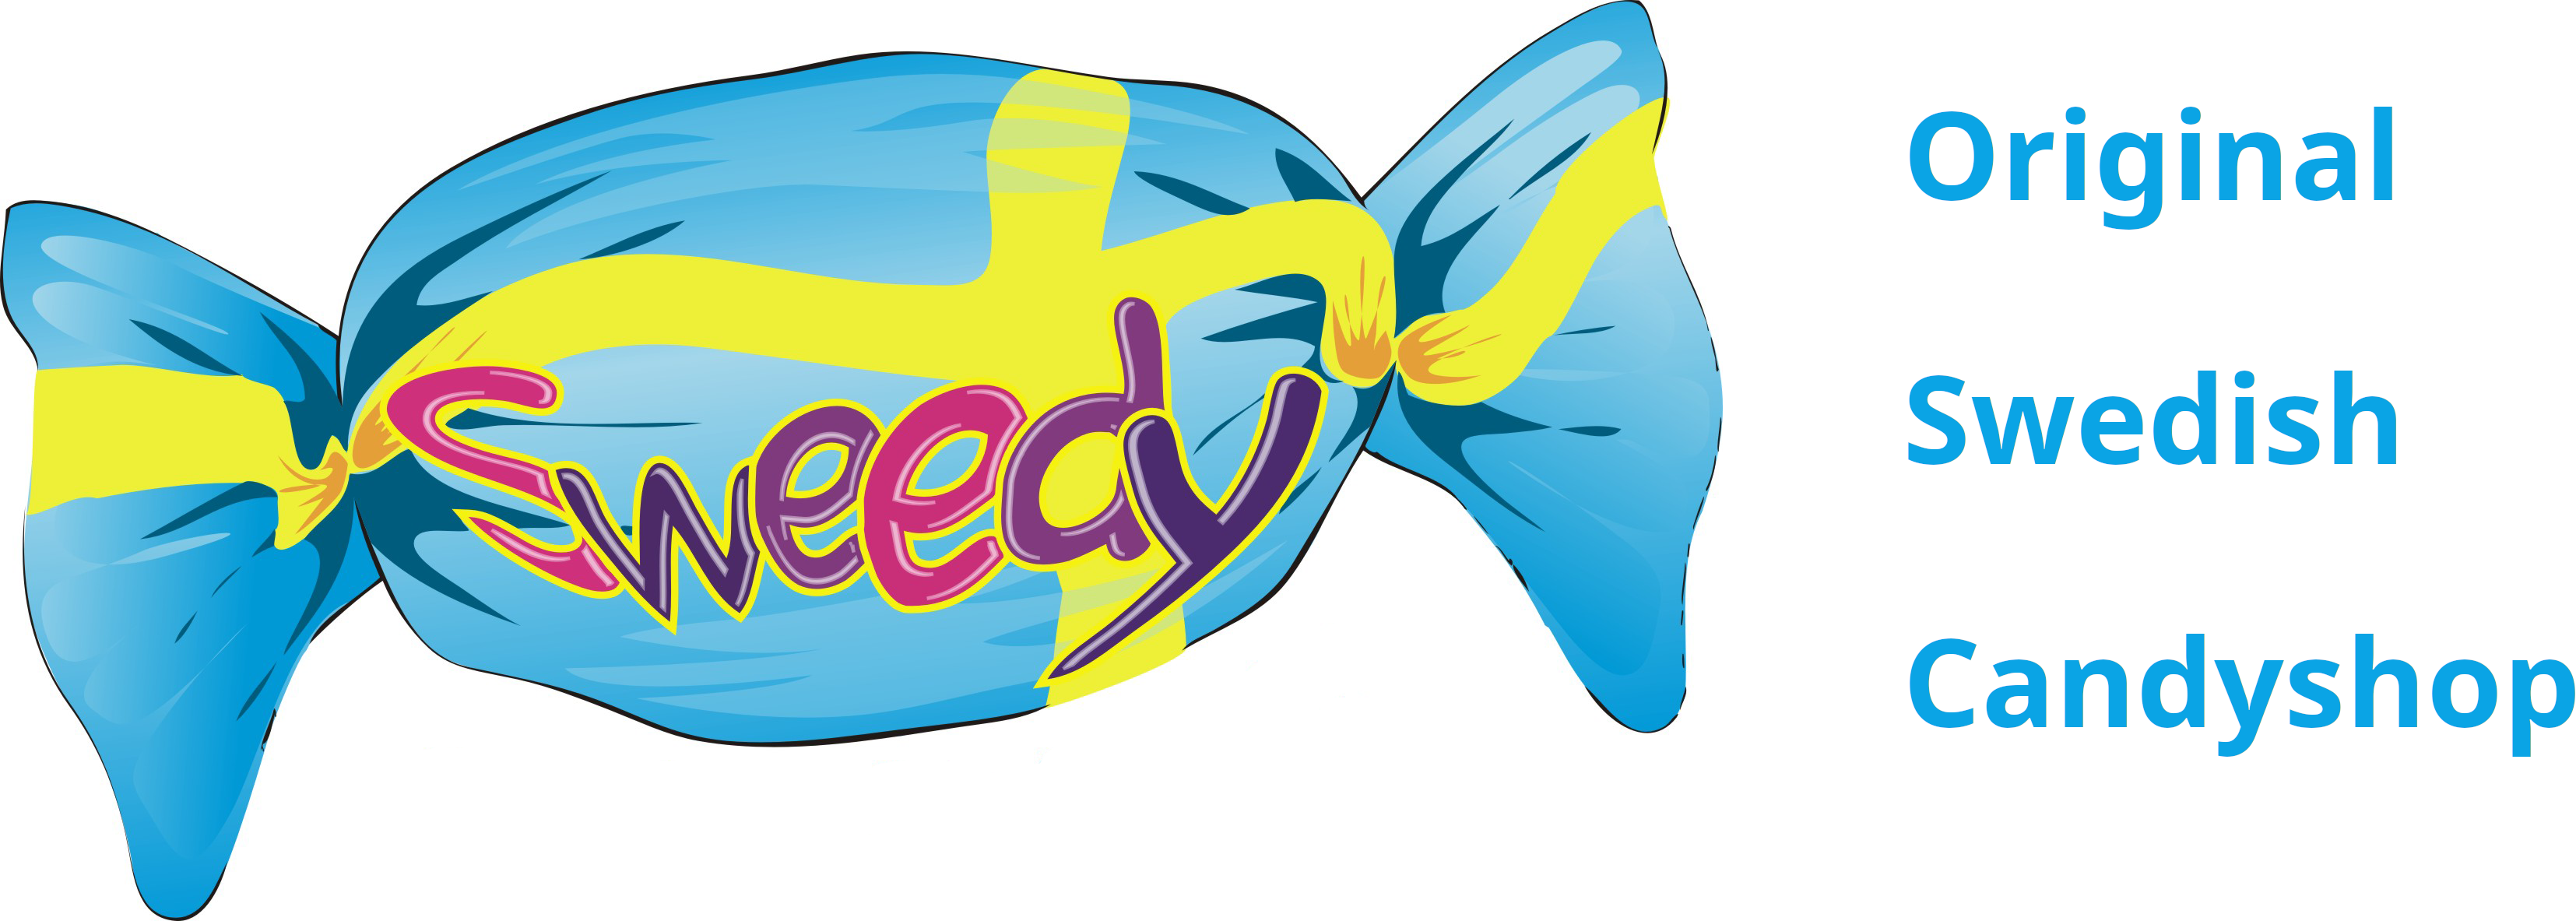 Sweedy - Original Swedish Candyshop